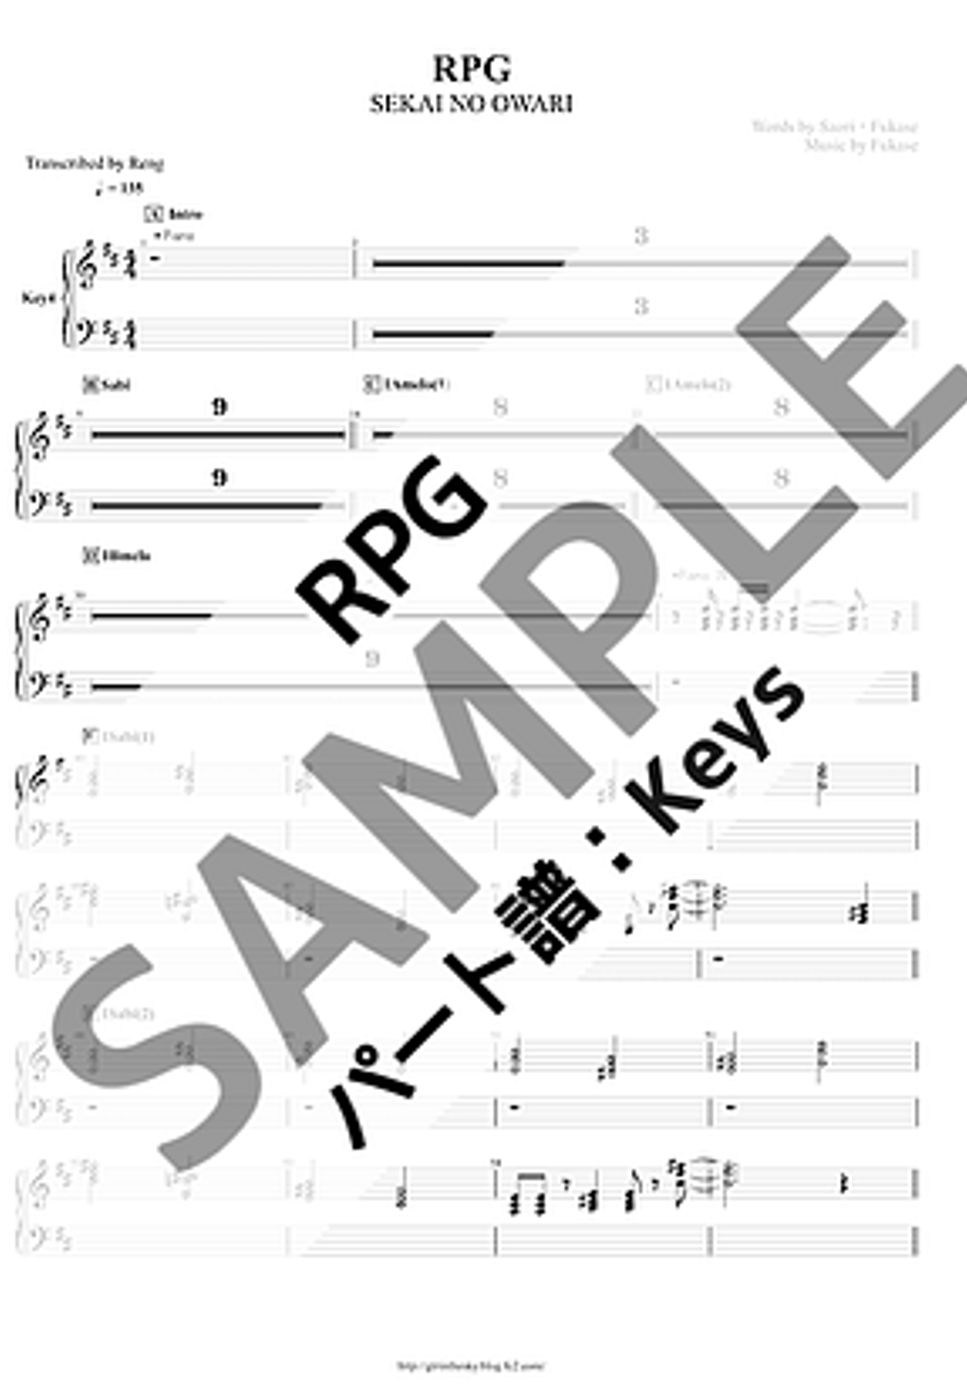 SEKAI NO OWARI - RPG (Keys/Organ/Accordion/Key/Church Organ) by Score by Reng